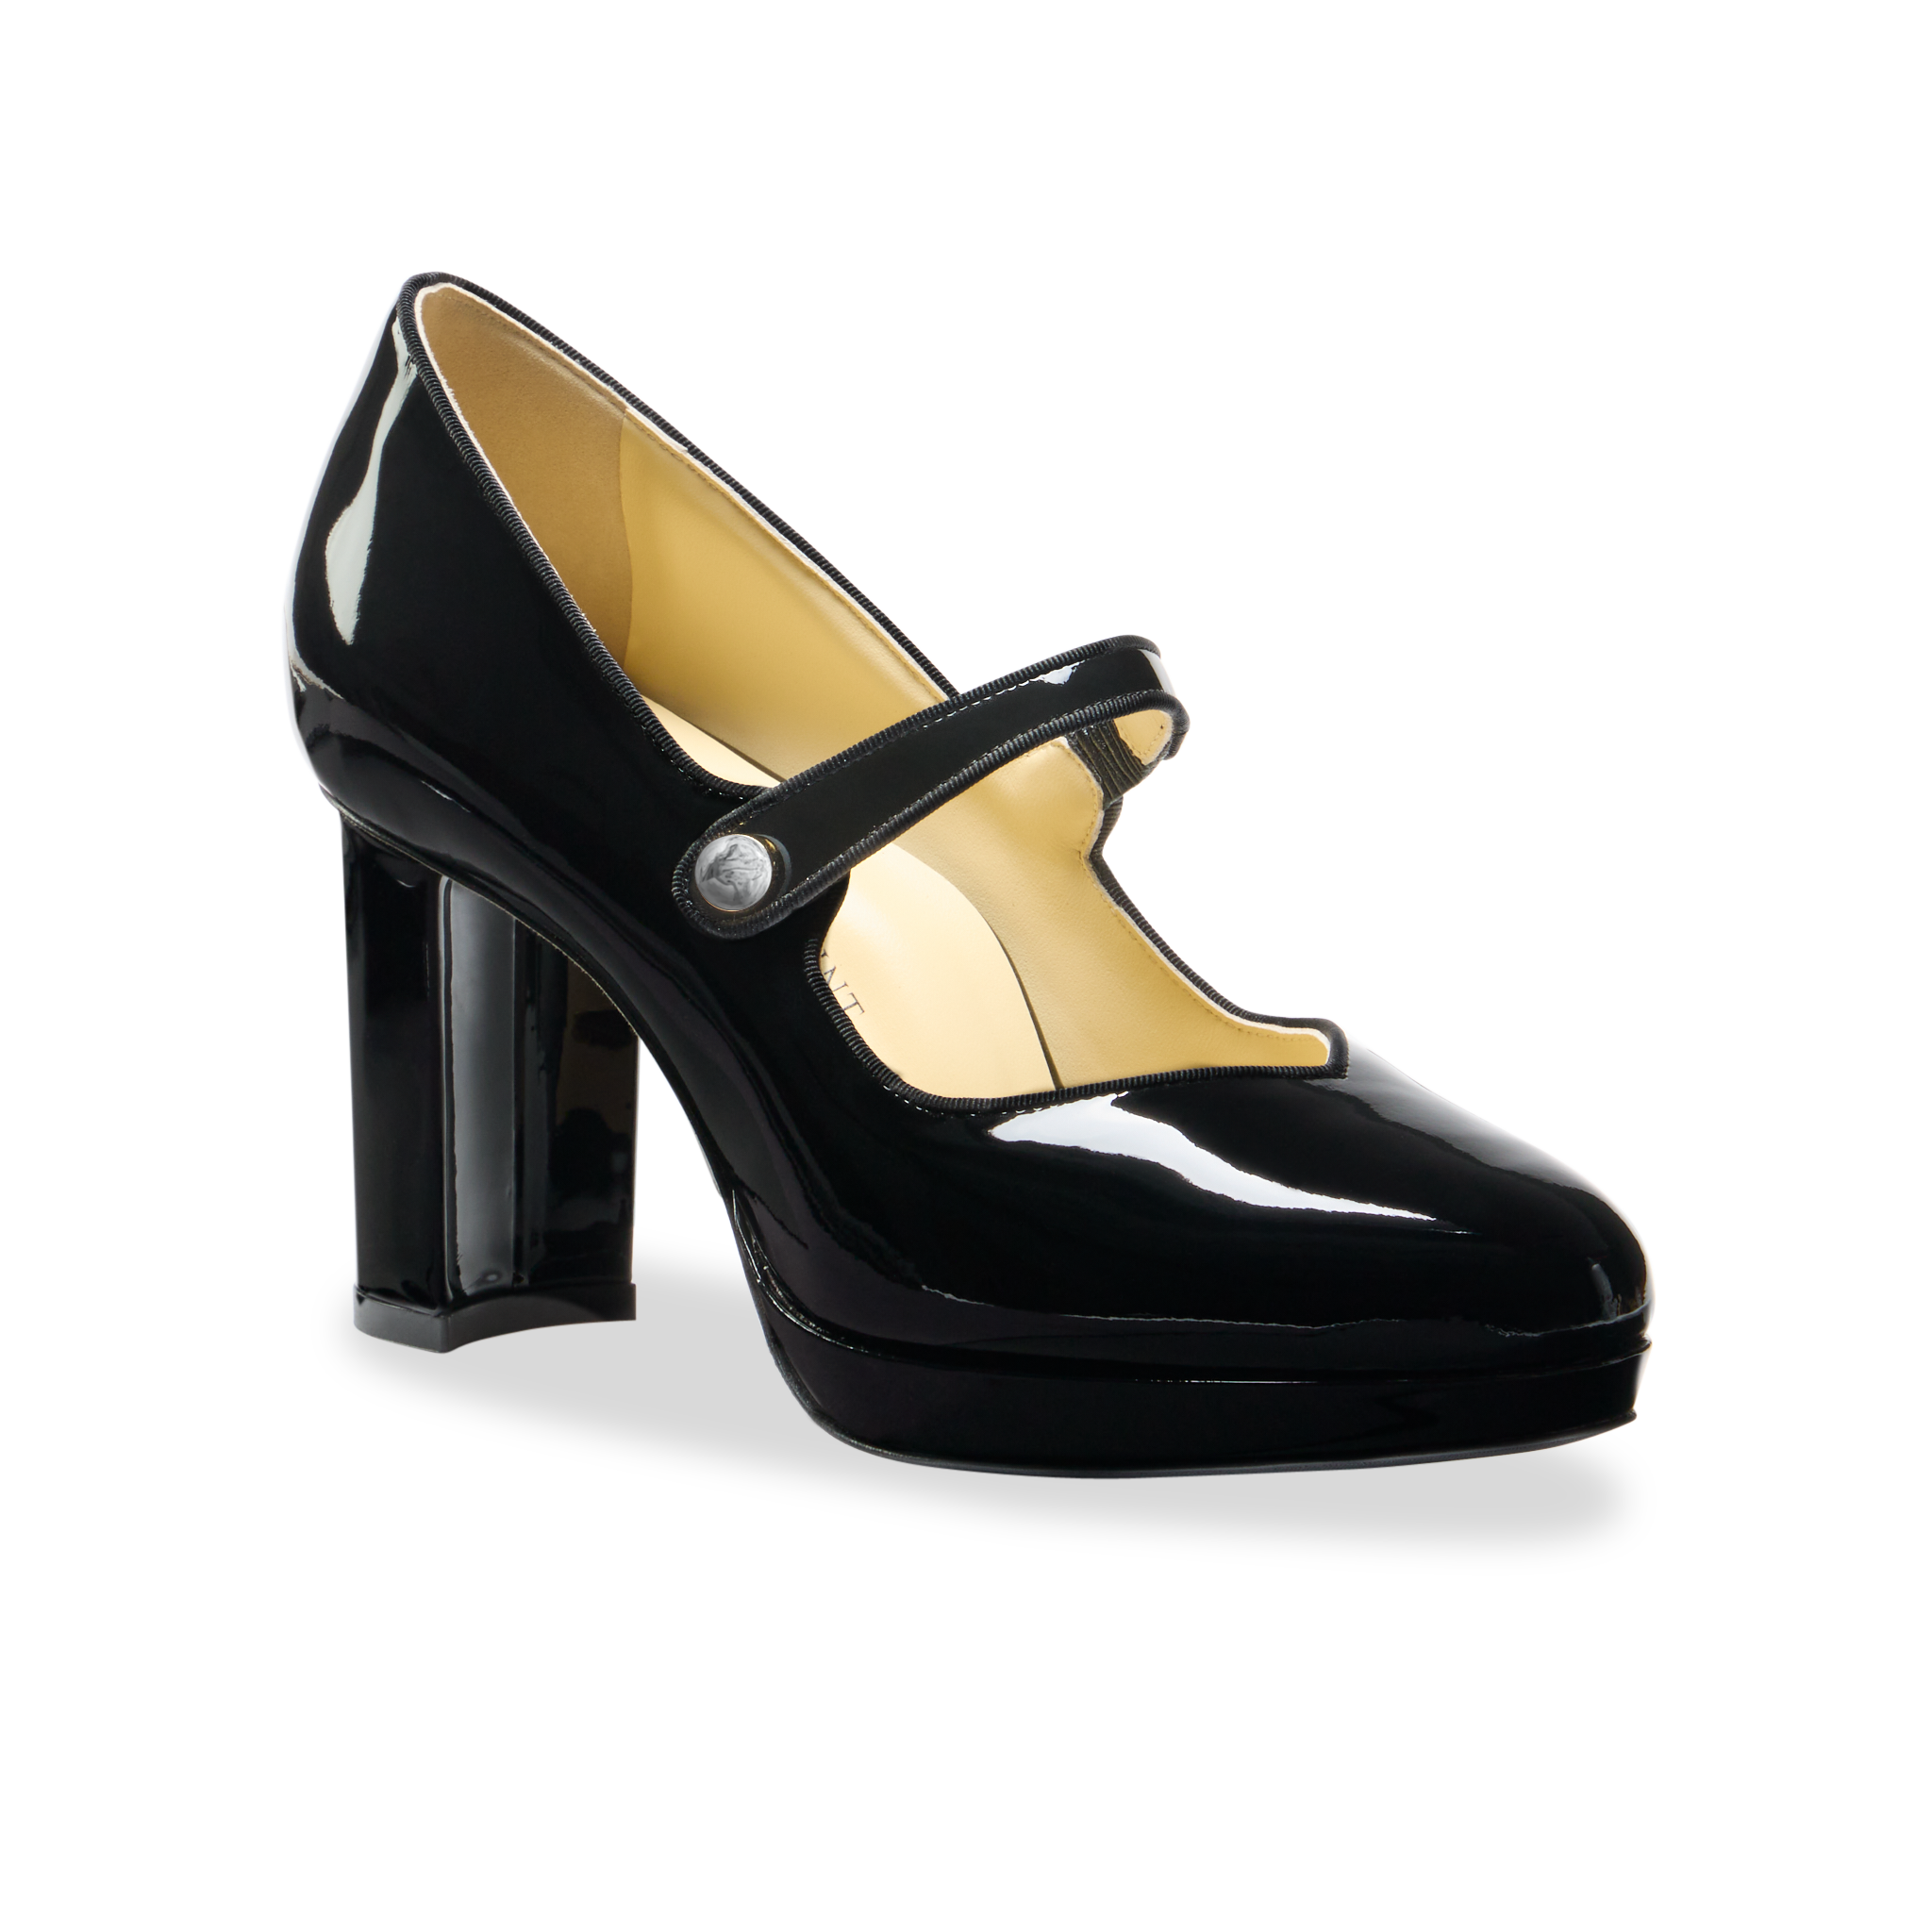 Wednesday Women's Vintage Mary Jane Shoes (Merlot) – American Duchess